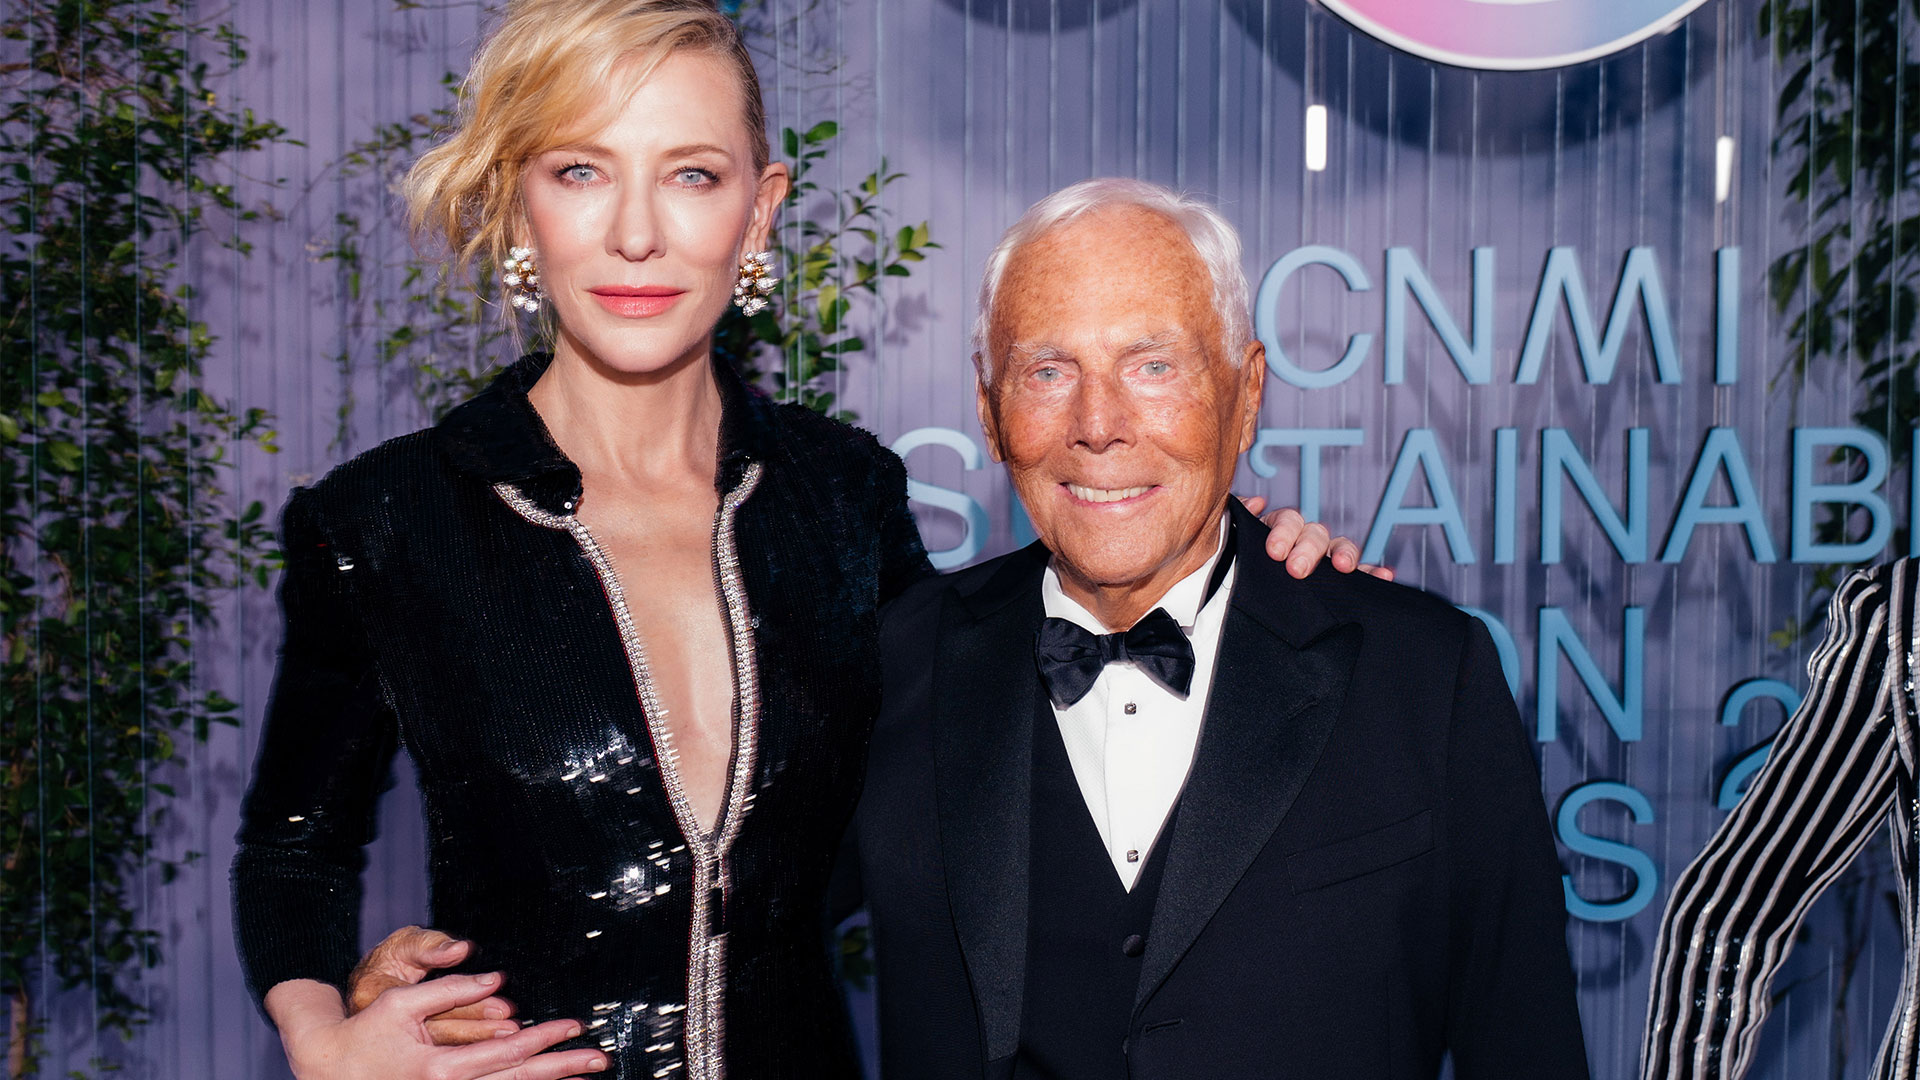 Giorgio Armani Cate Blanchett Visionary Award at 2022 CNMI Sustainable Fashion Awards